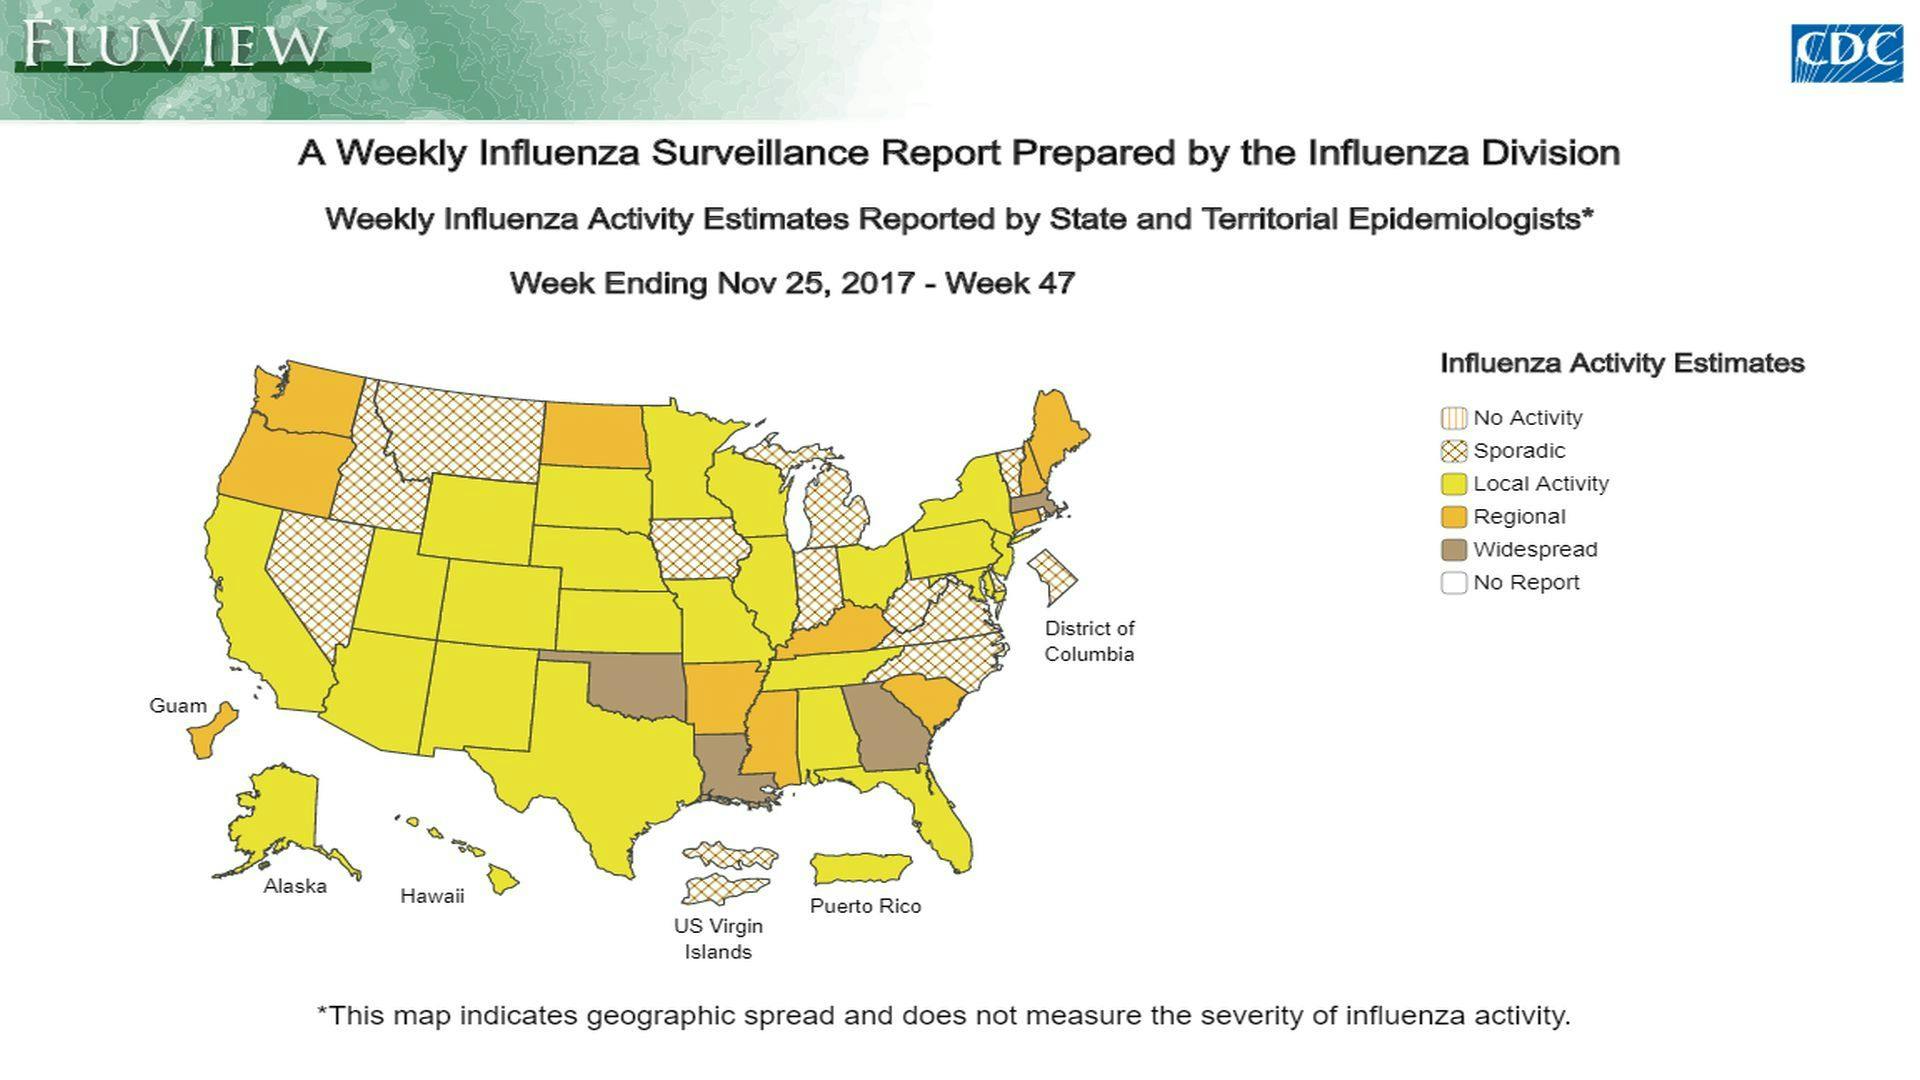 CDC Flu Update: Influenza-Like Illness Consultations Rise Above Baseline